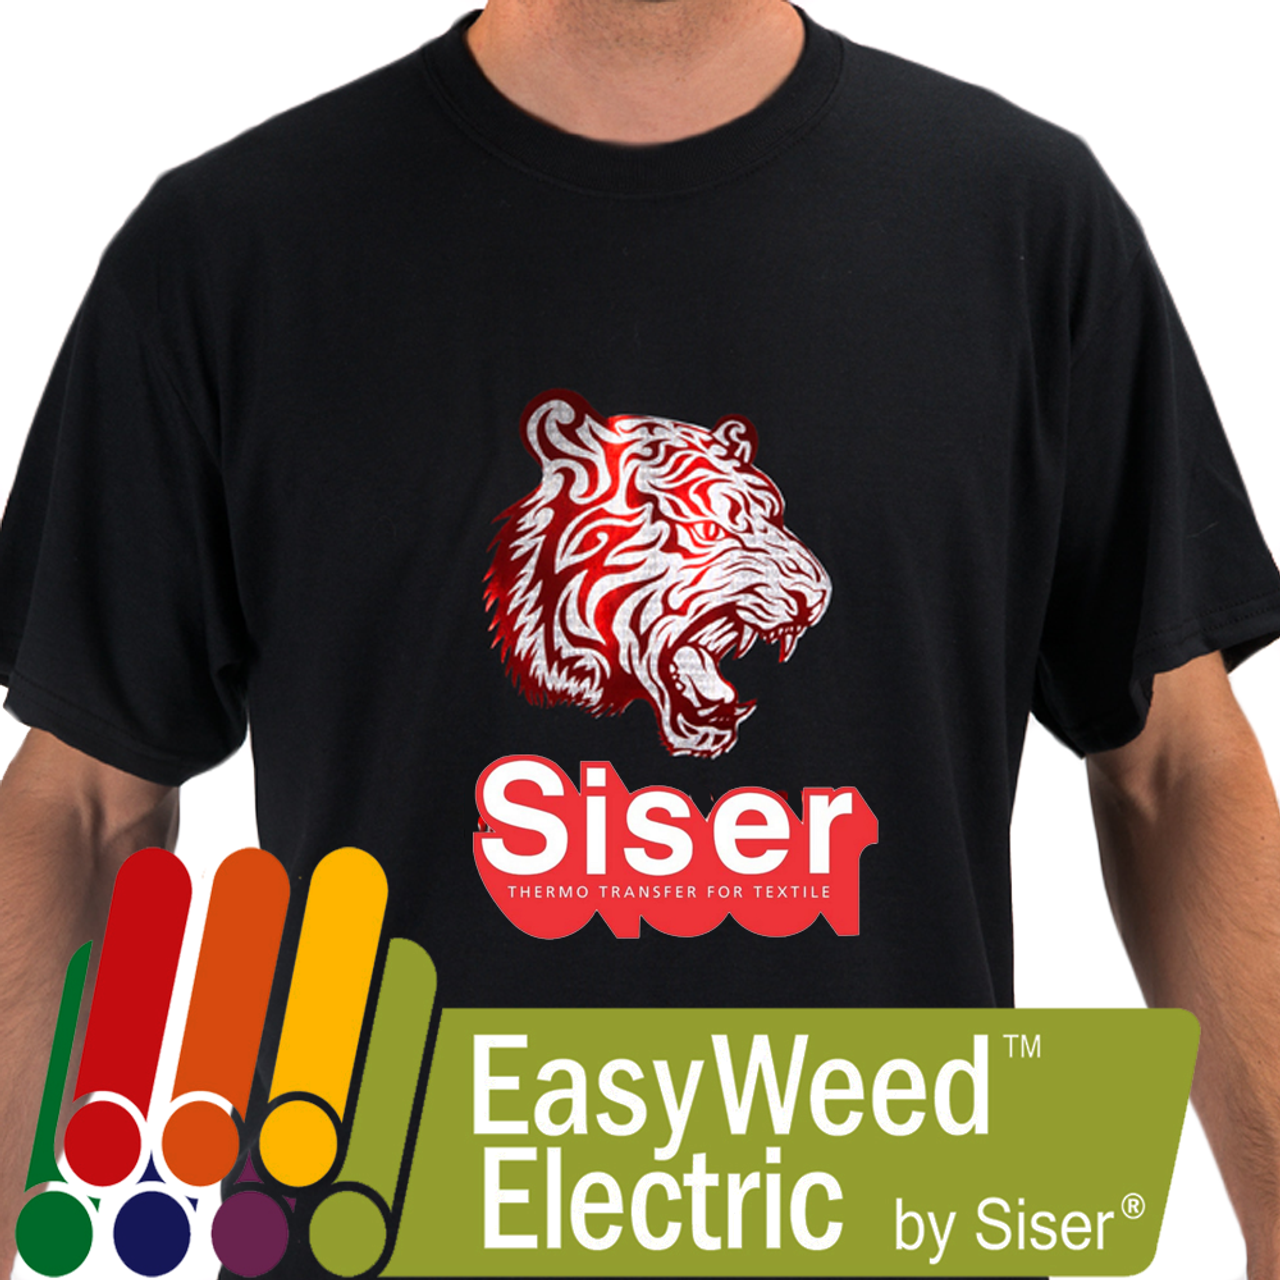 SISER EasyWeed Heat Transfer Vinyl Tshirt /Textile Thin HTV 12 x 60 (5ft)